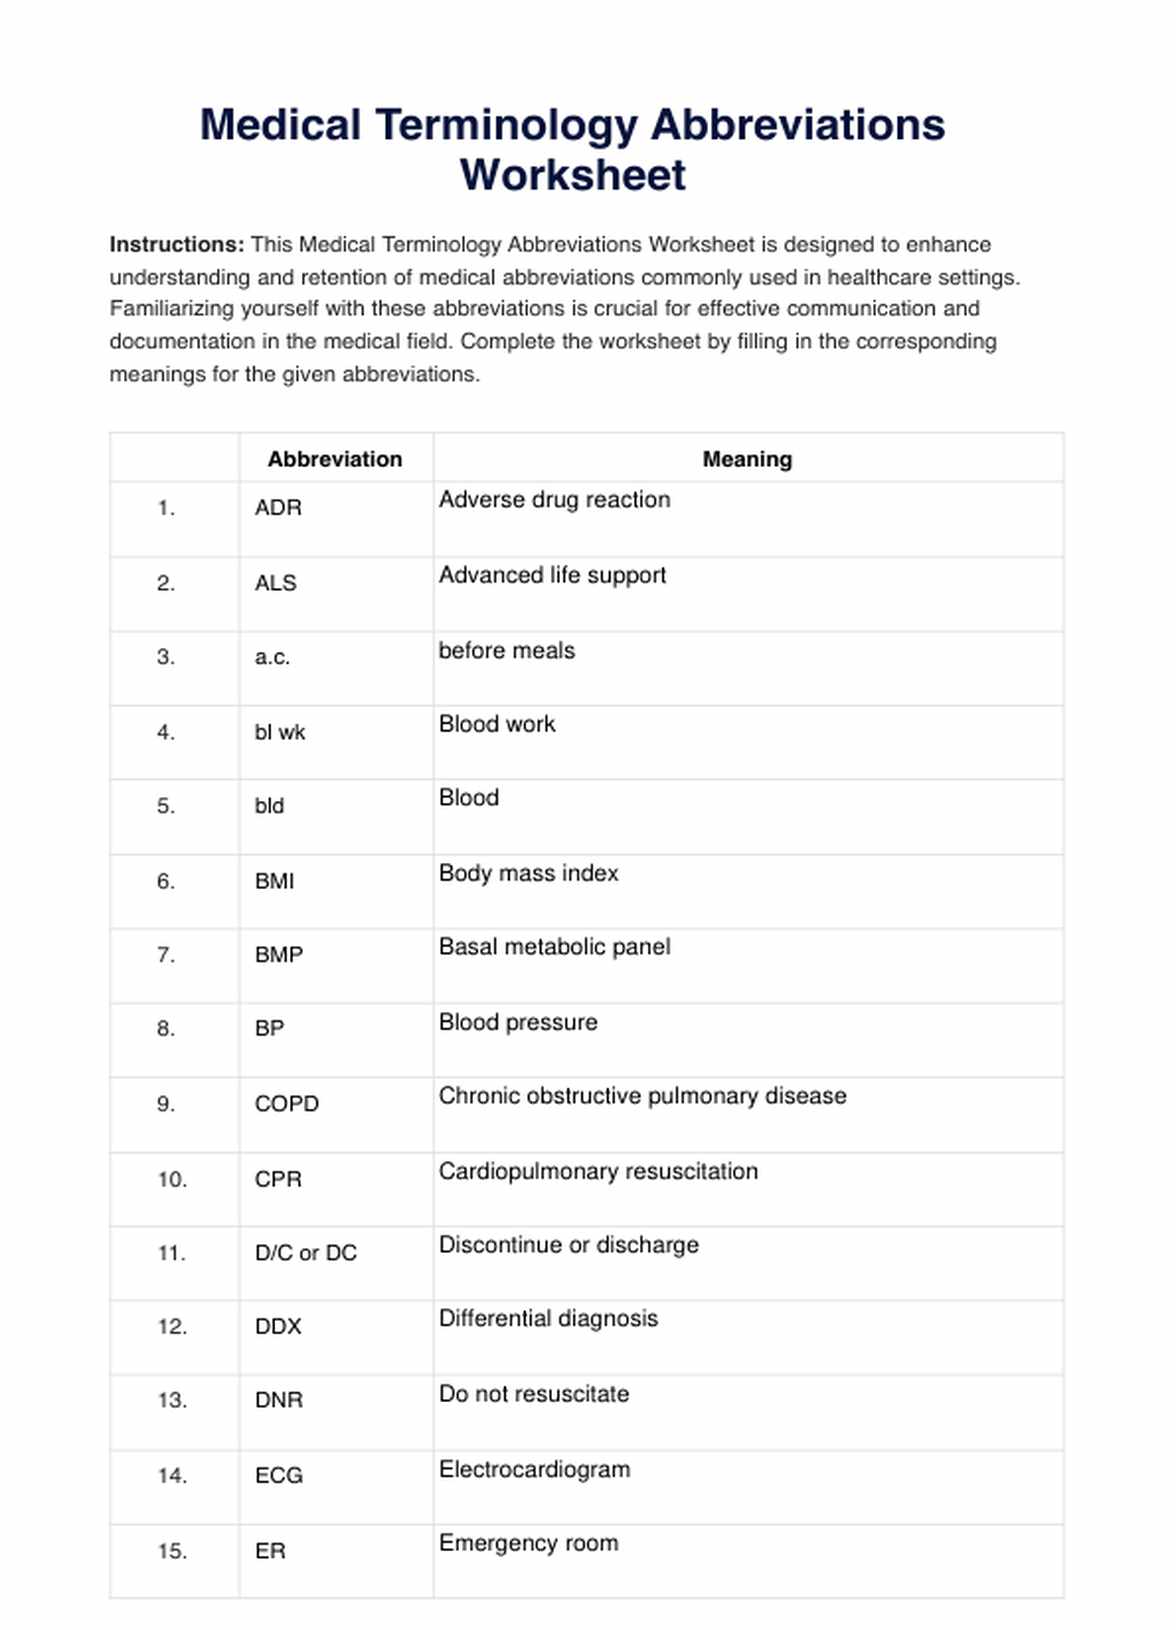 Medical Terminology Abbreviations Worksheet PDF Example